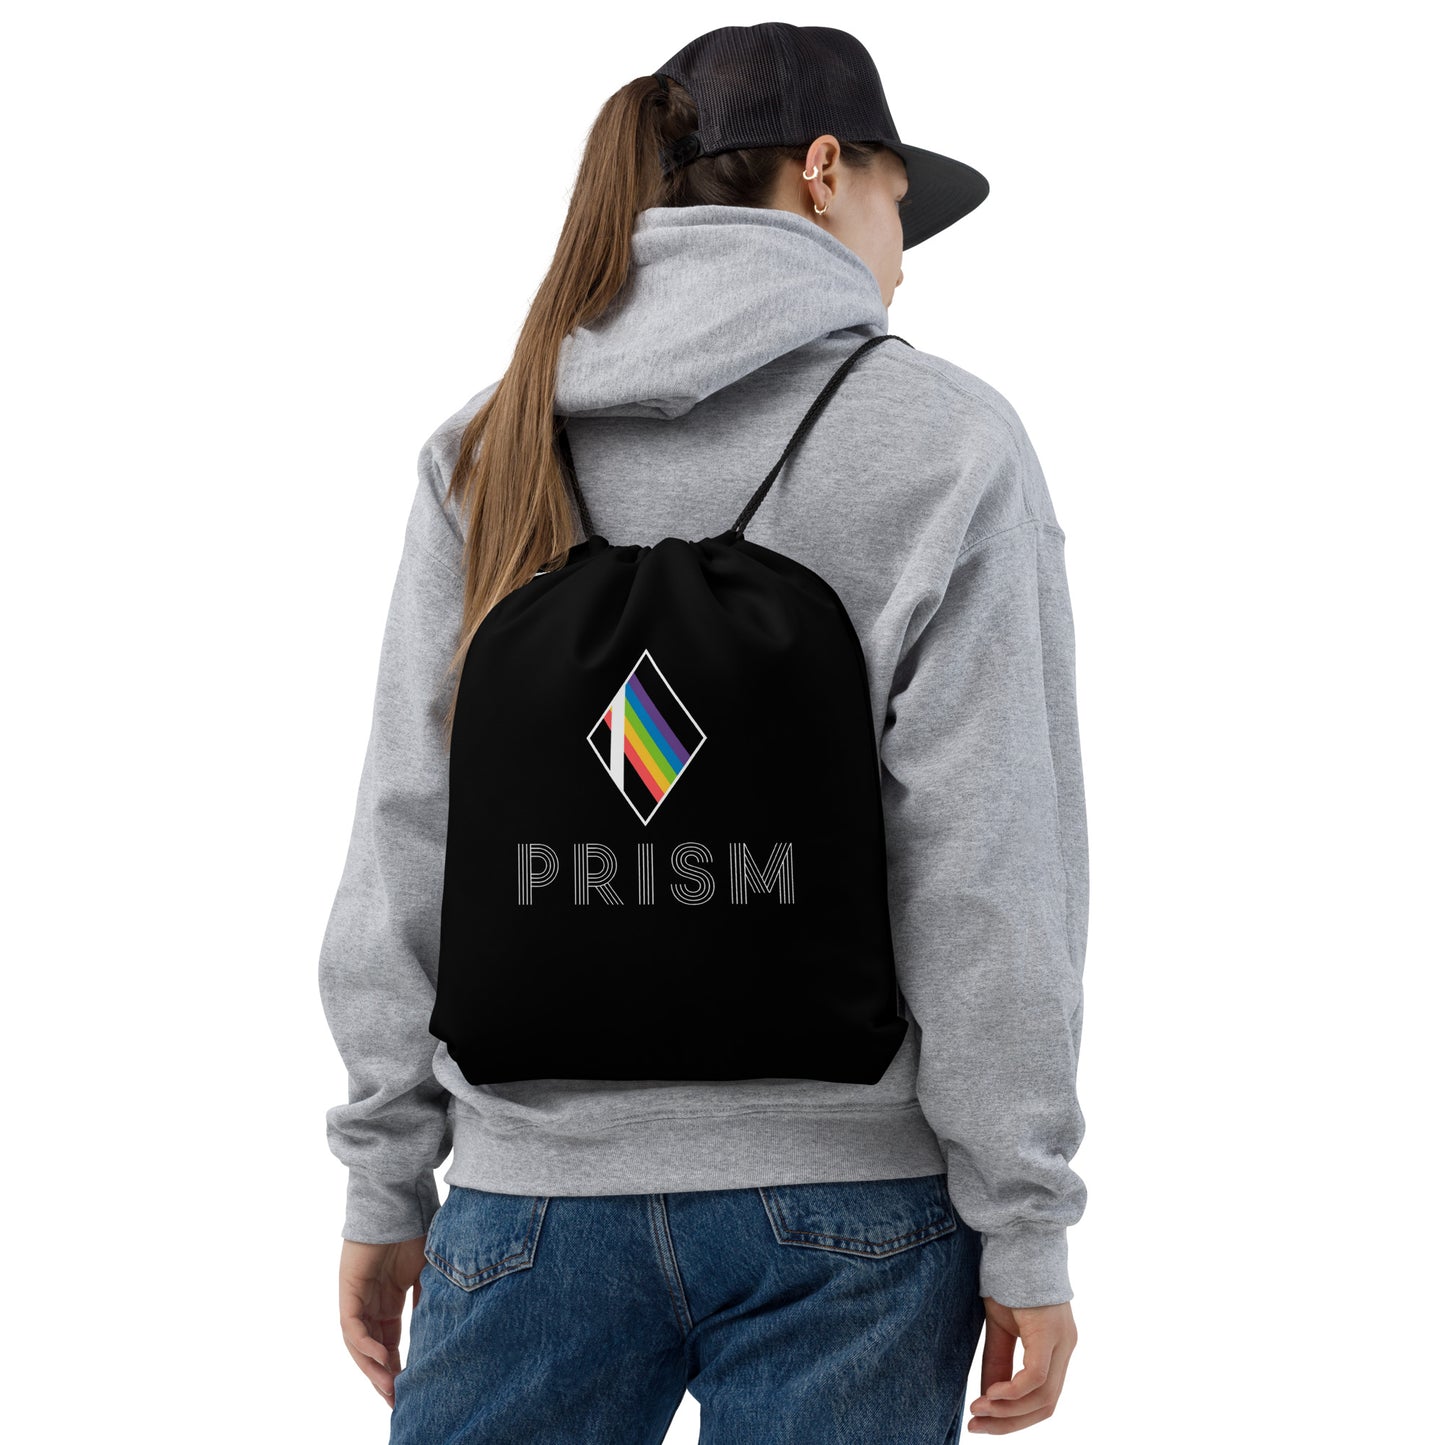 Prism - Printed Drawstring bag